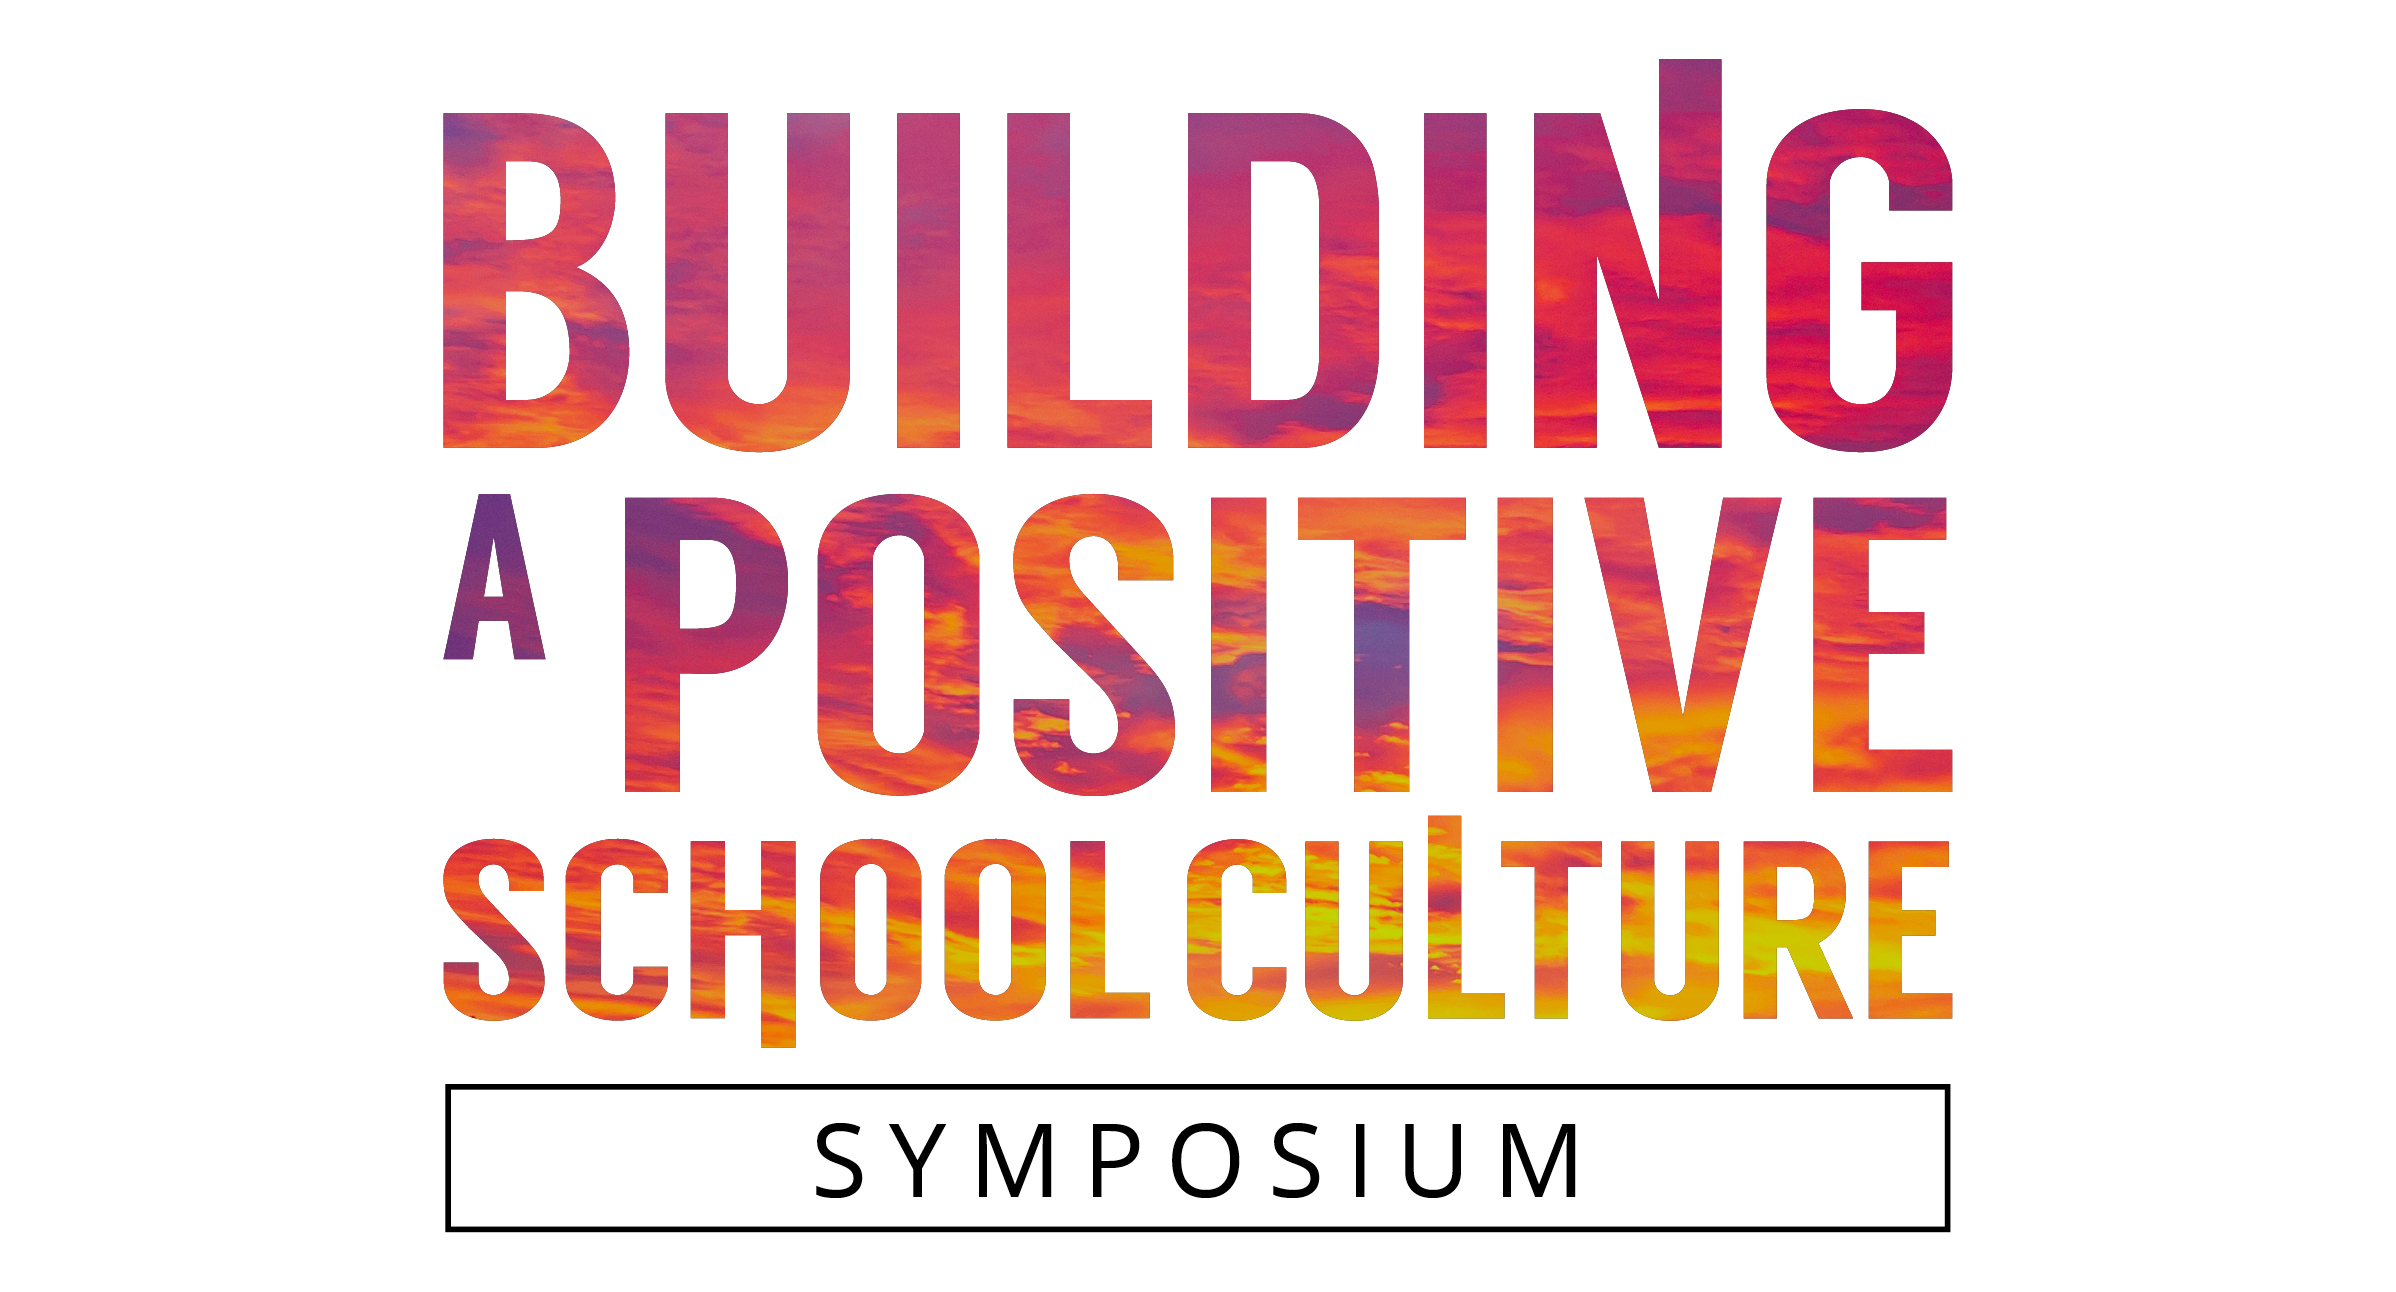 Building a Positive School Culture Symposium